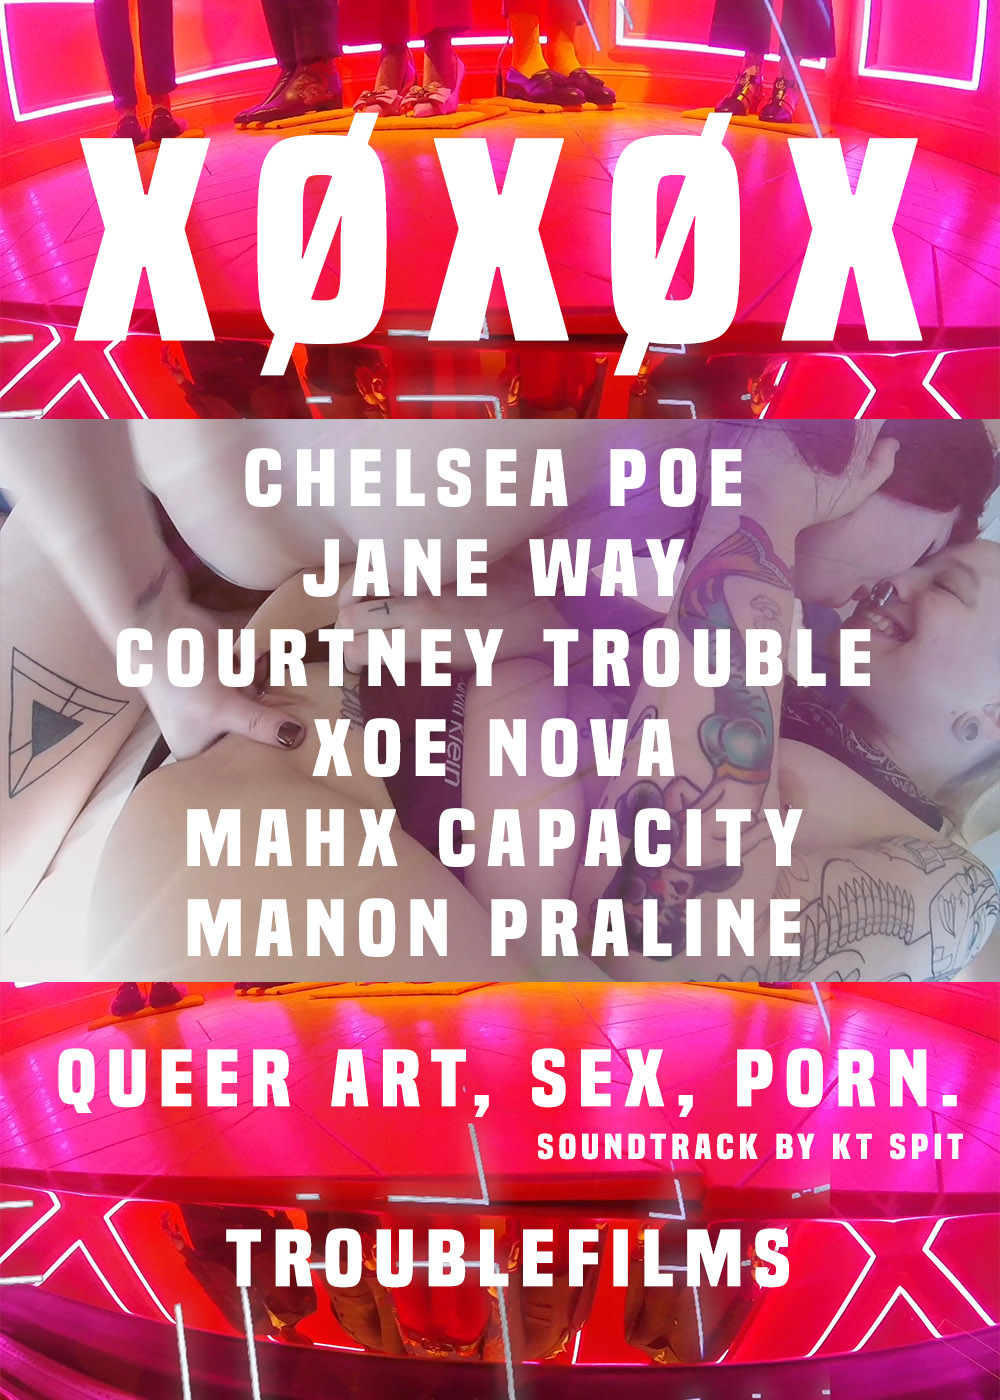 Xoxox - XÃ˜XÃ˜X Queer Porn by Chelsea Poe KT Spit - TROUBLEFILMS